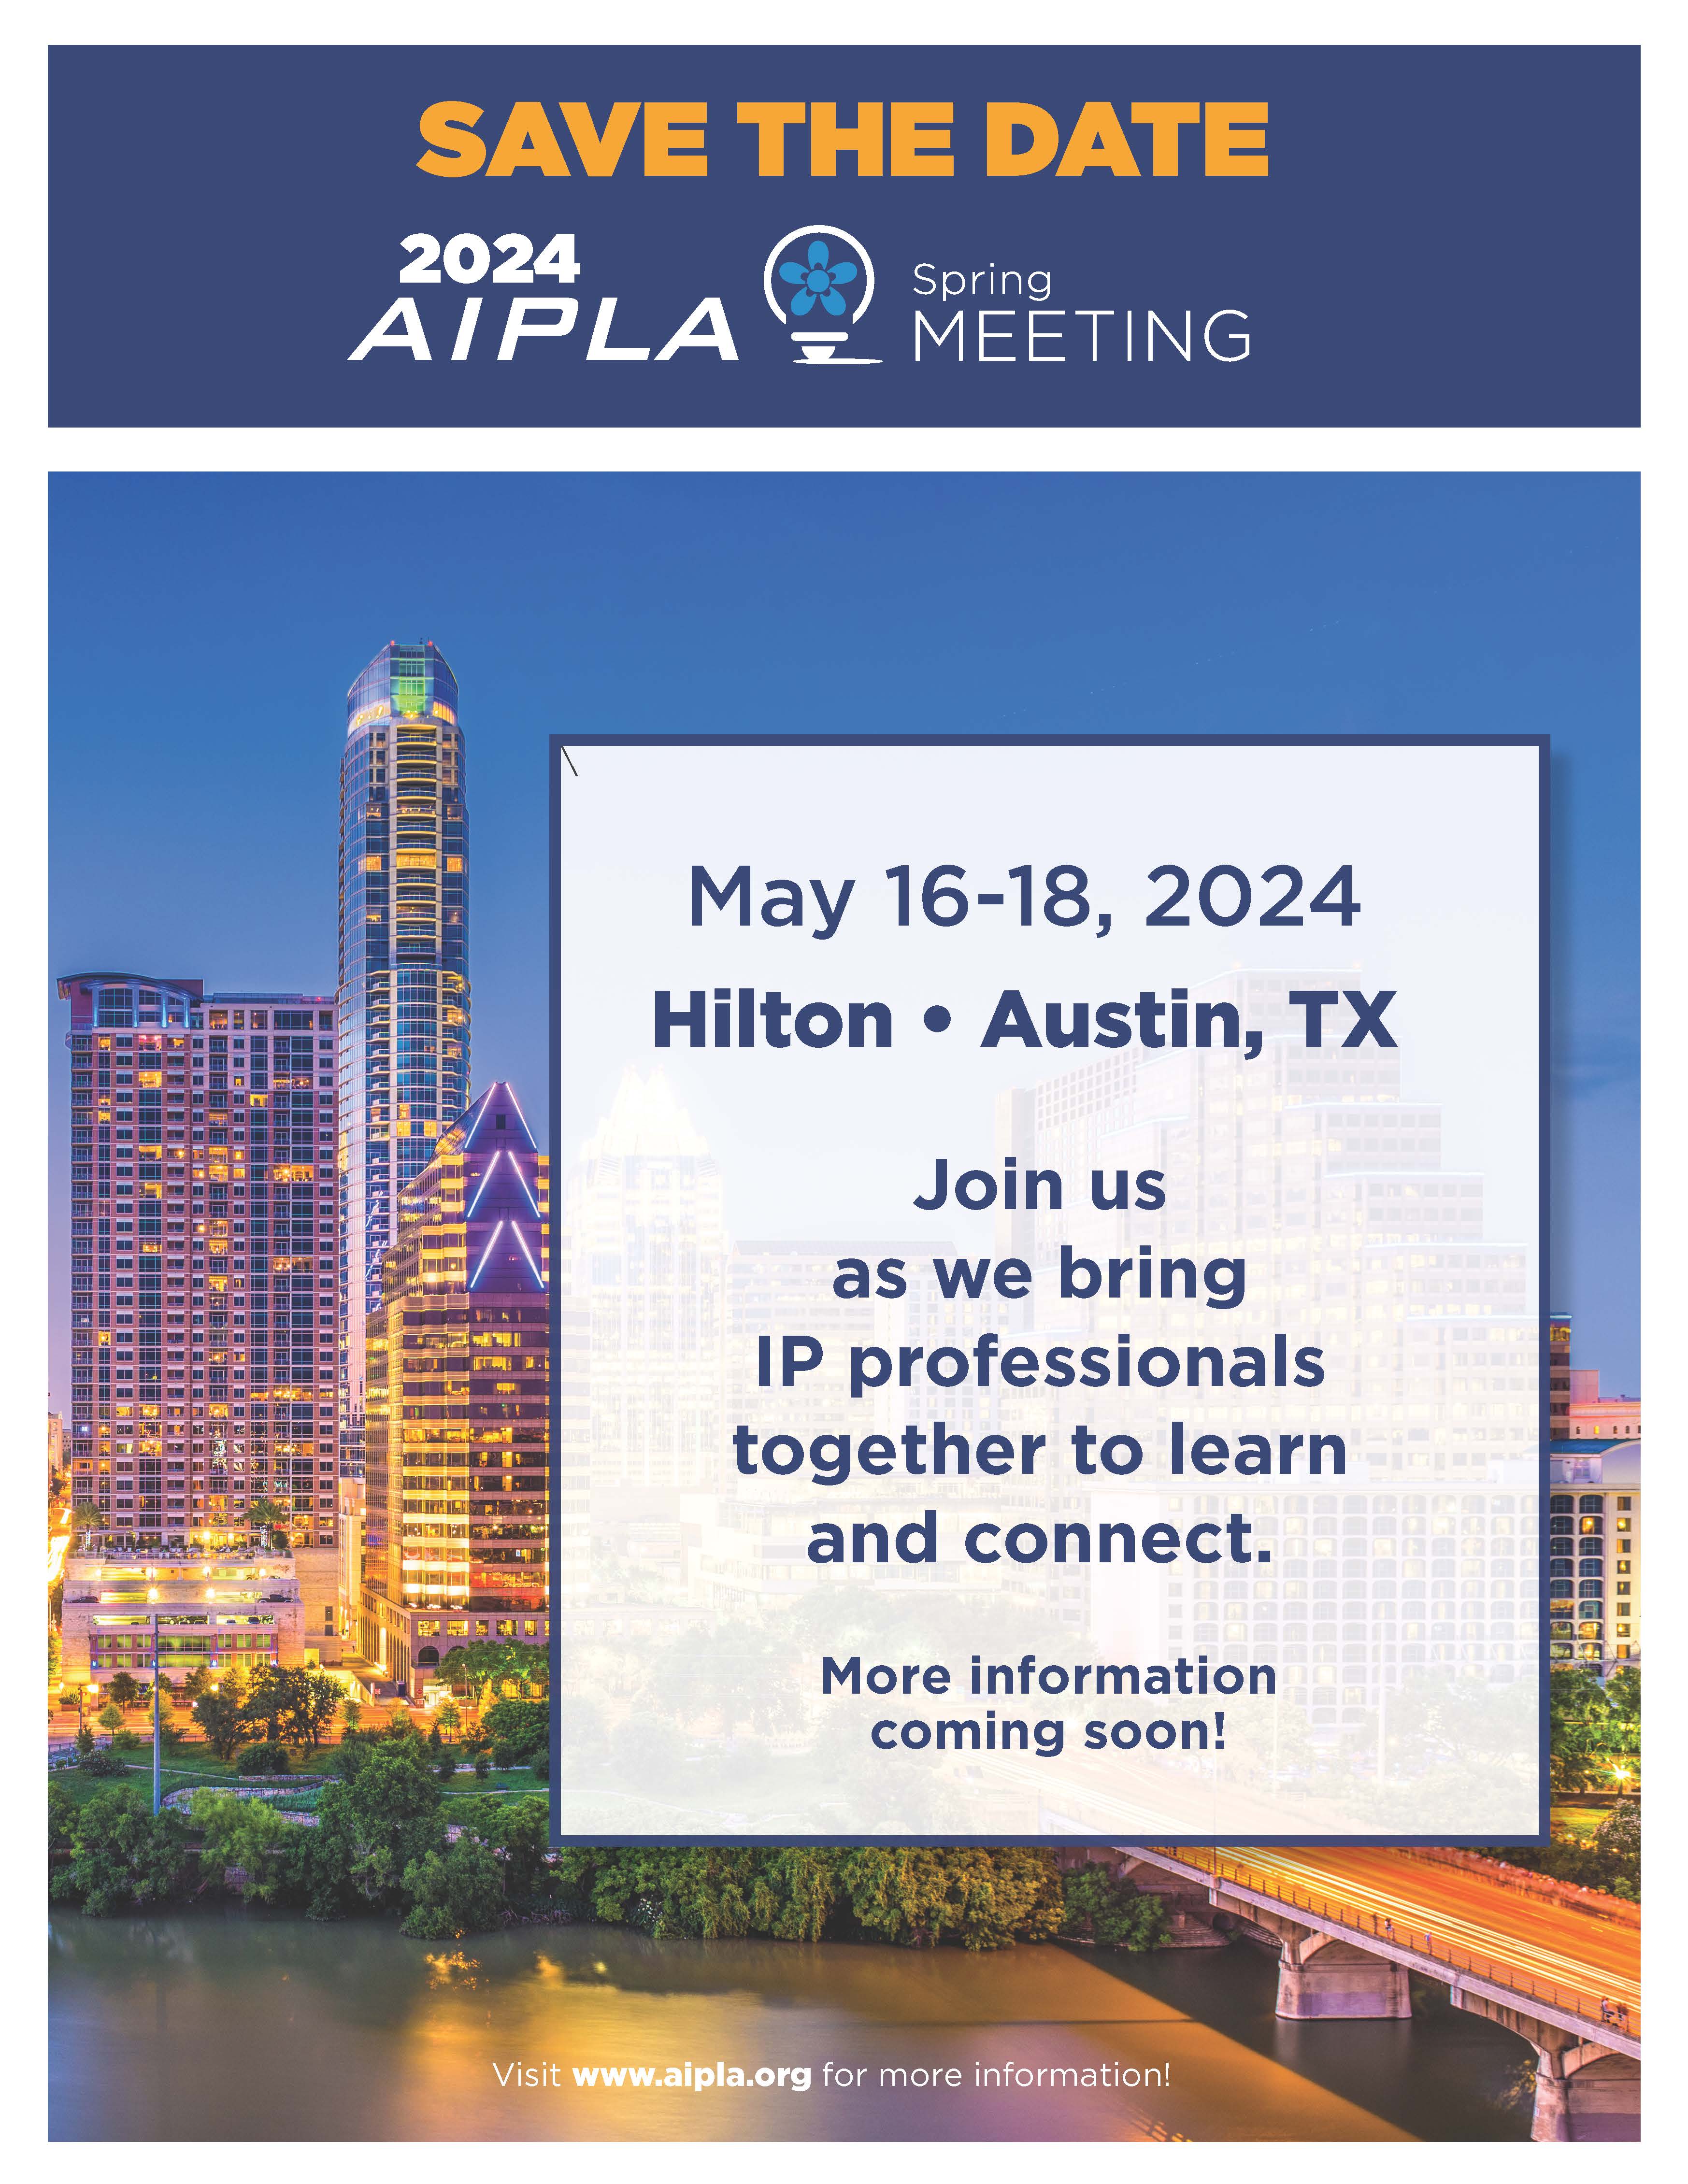 AIPLA 2024 Spring Meeting